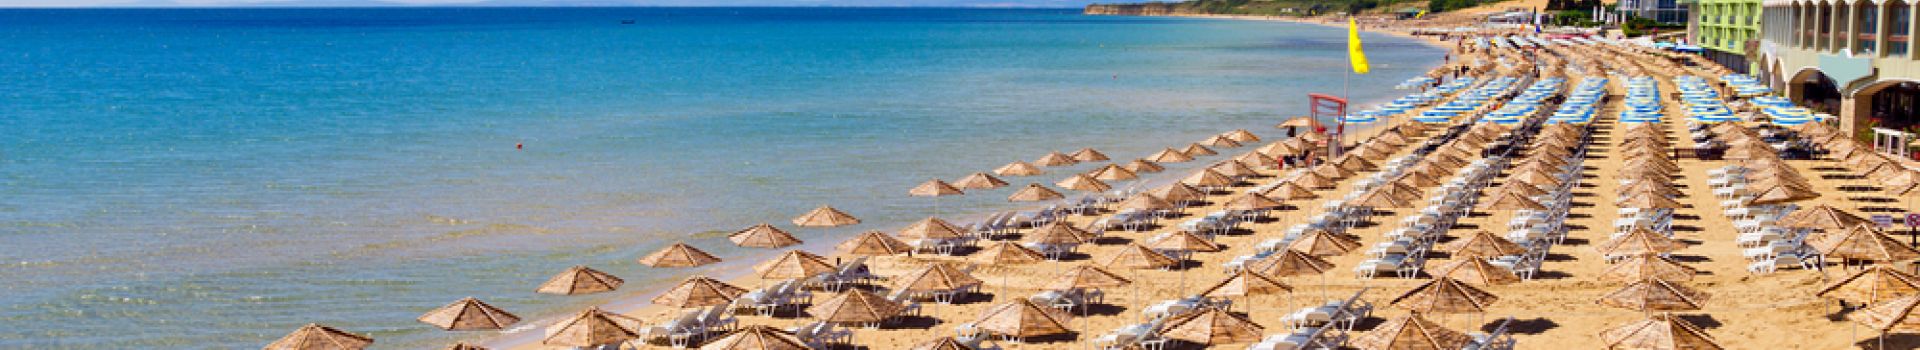 Last Minute Holidays to Sunny Beach, Bulgaria with Cassidy Travel